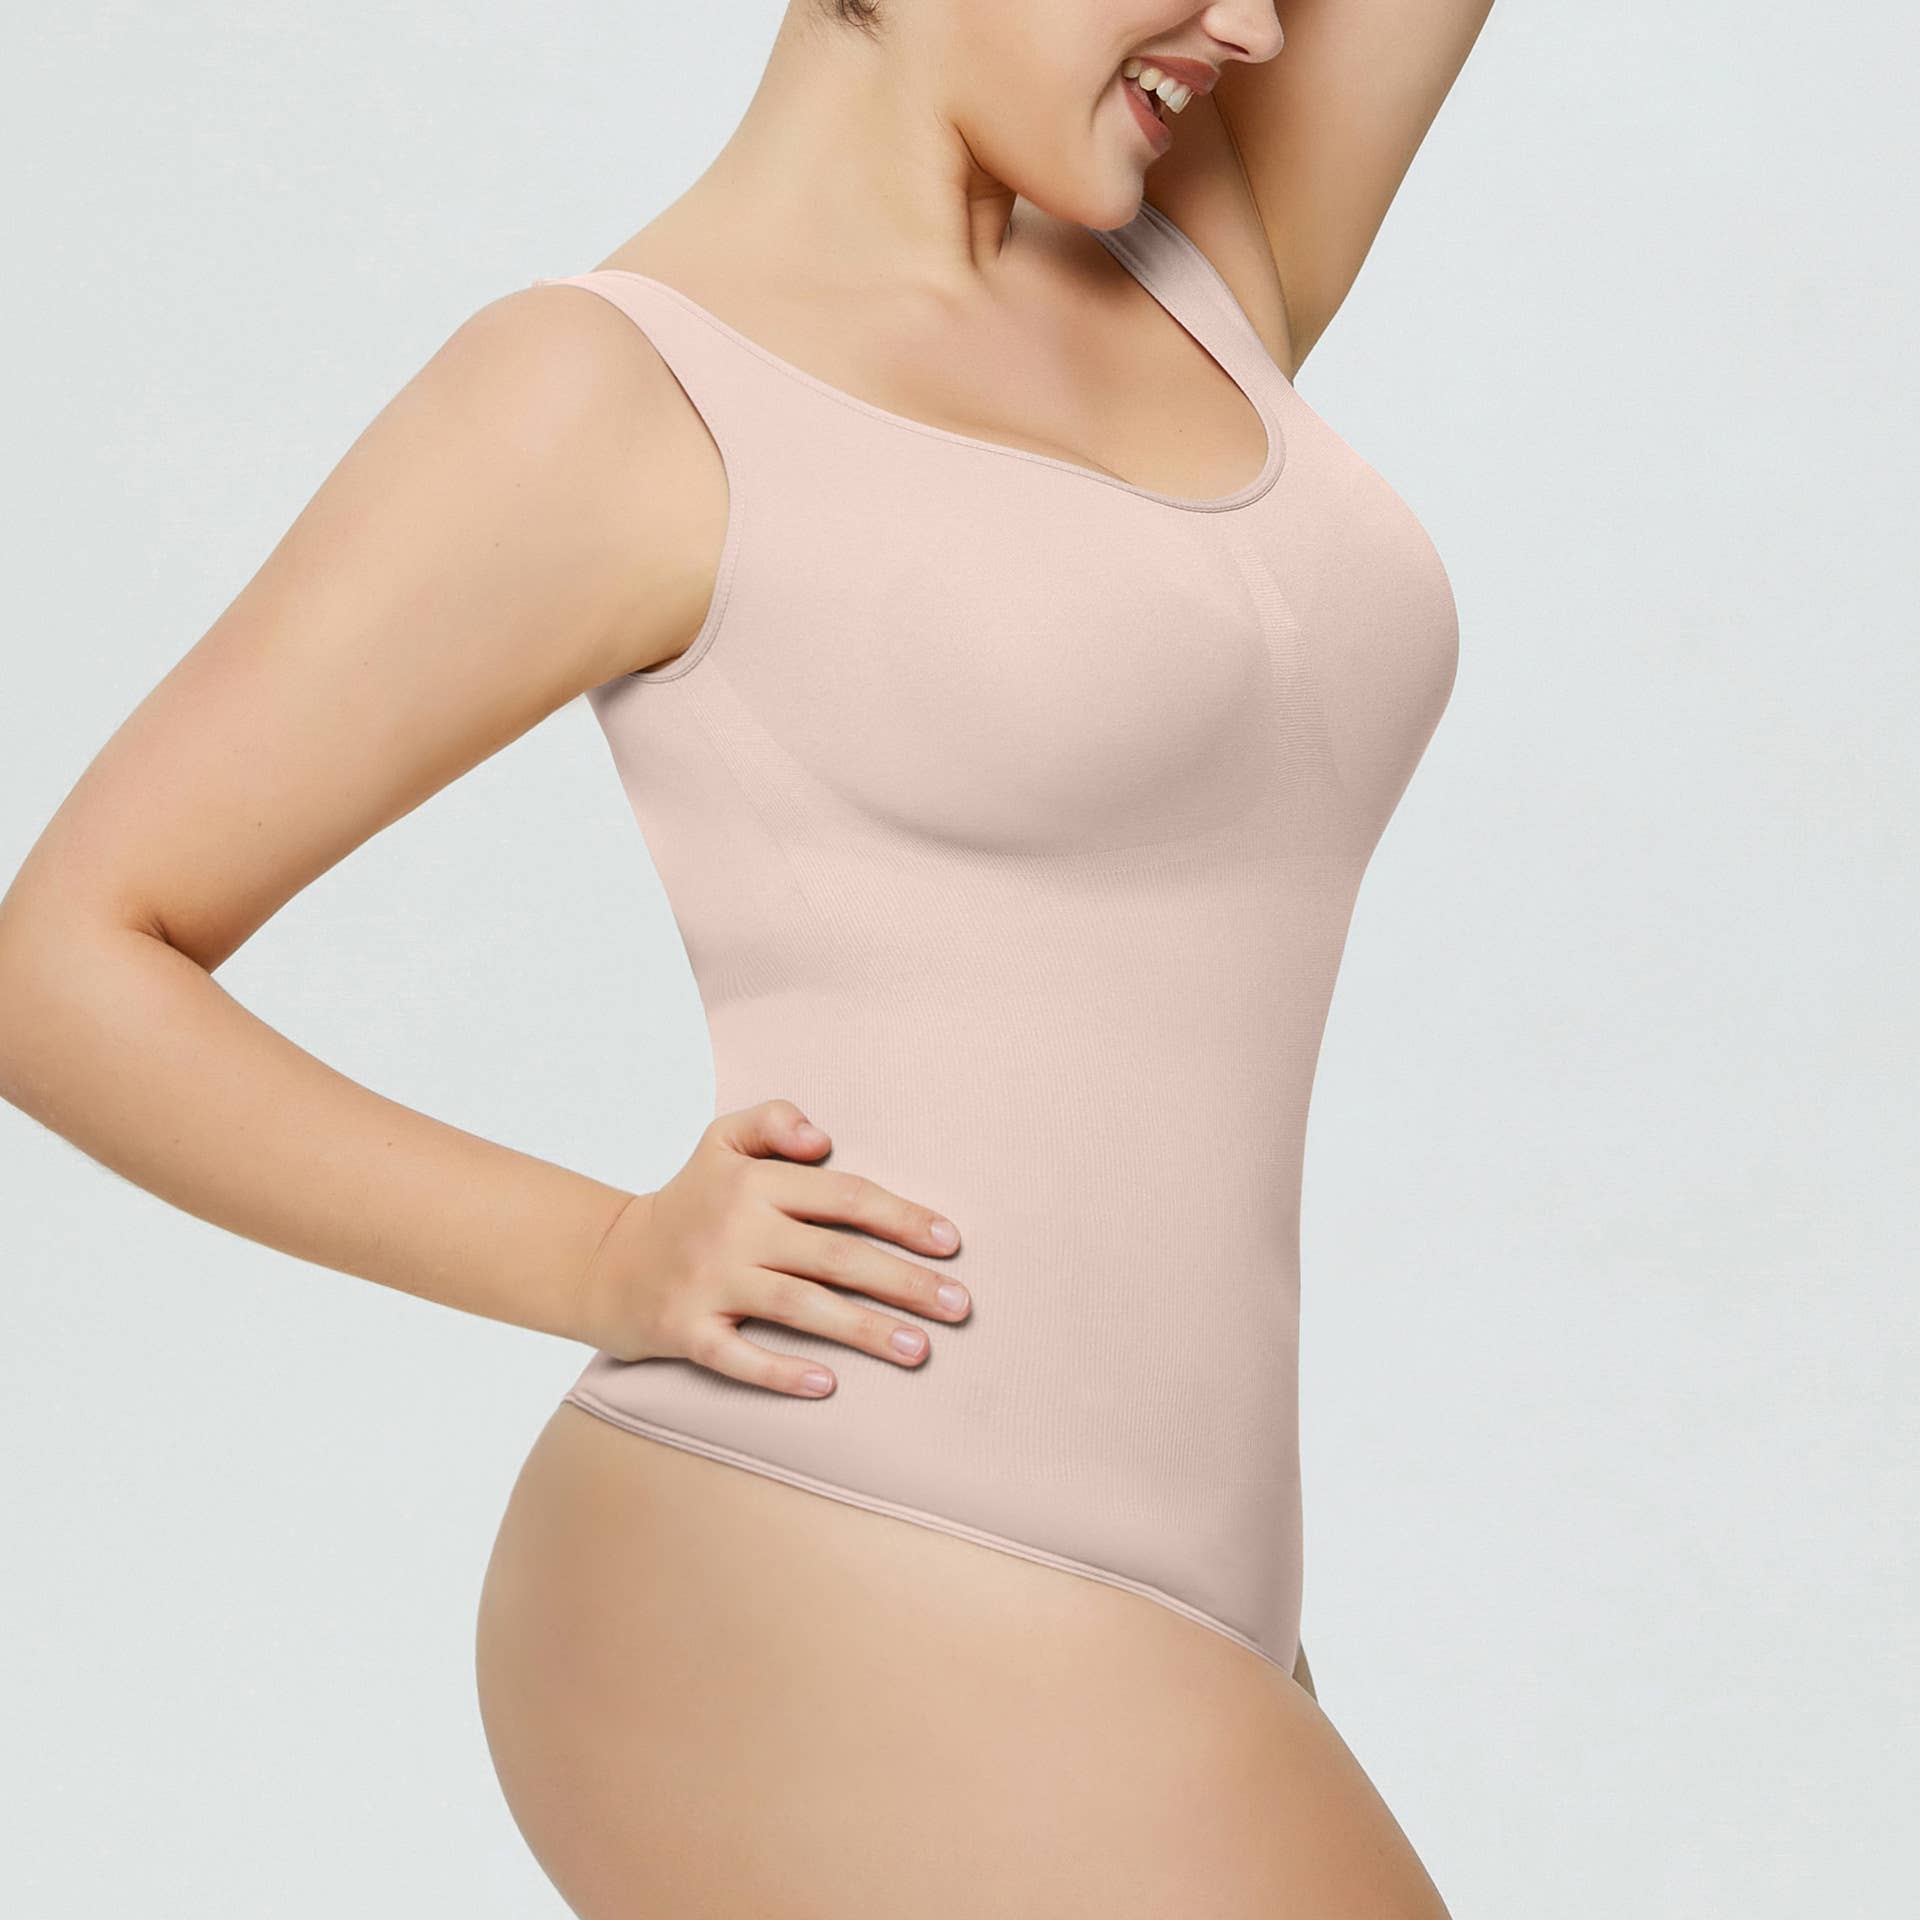 Buy 2 TWIST-THINK MORE Women's Cotton Nylon Seamless Wired Tummy